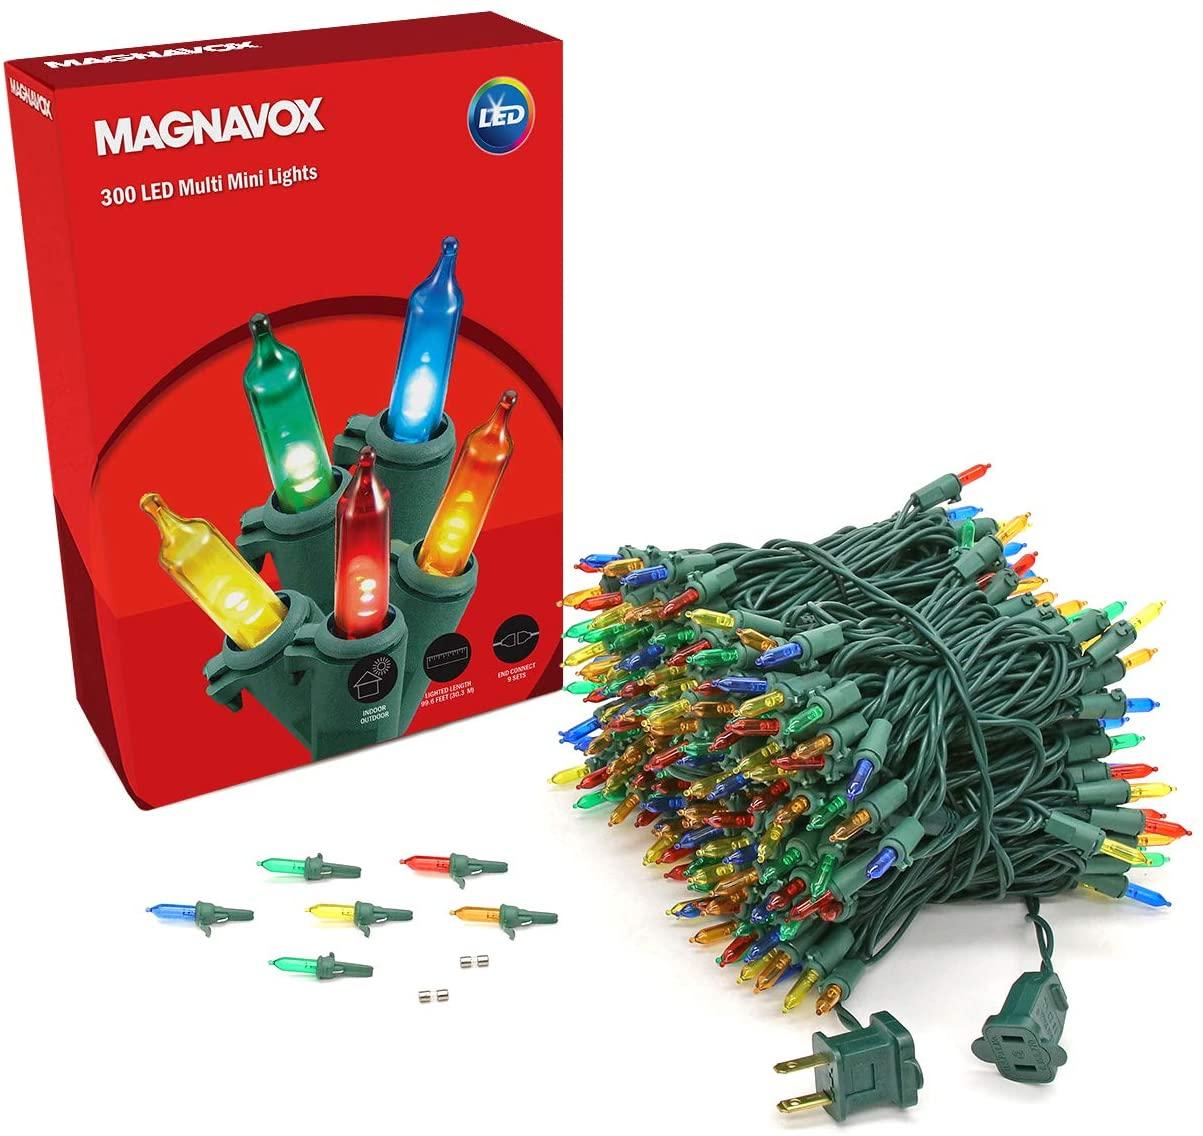 Maganavox 300 LED Multi-Colored Mini String Light Set for $4.73